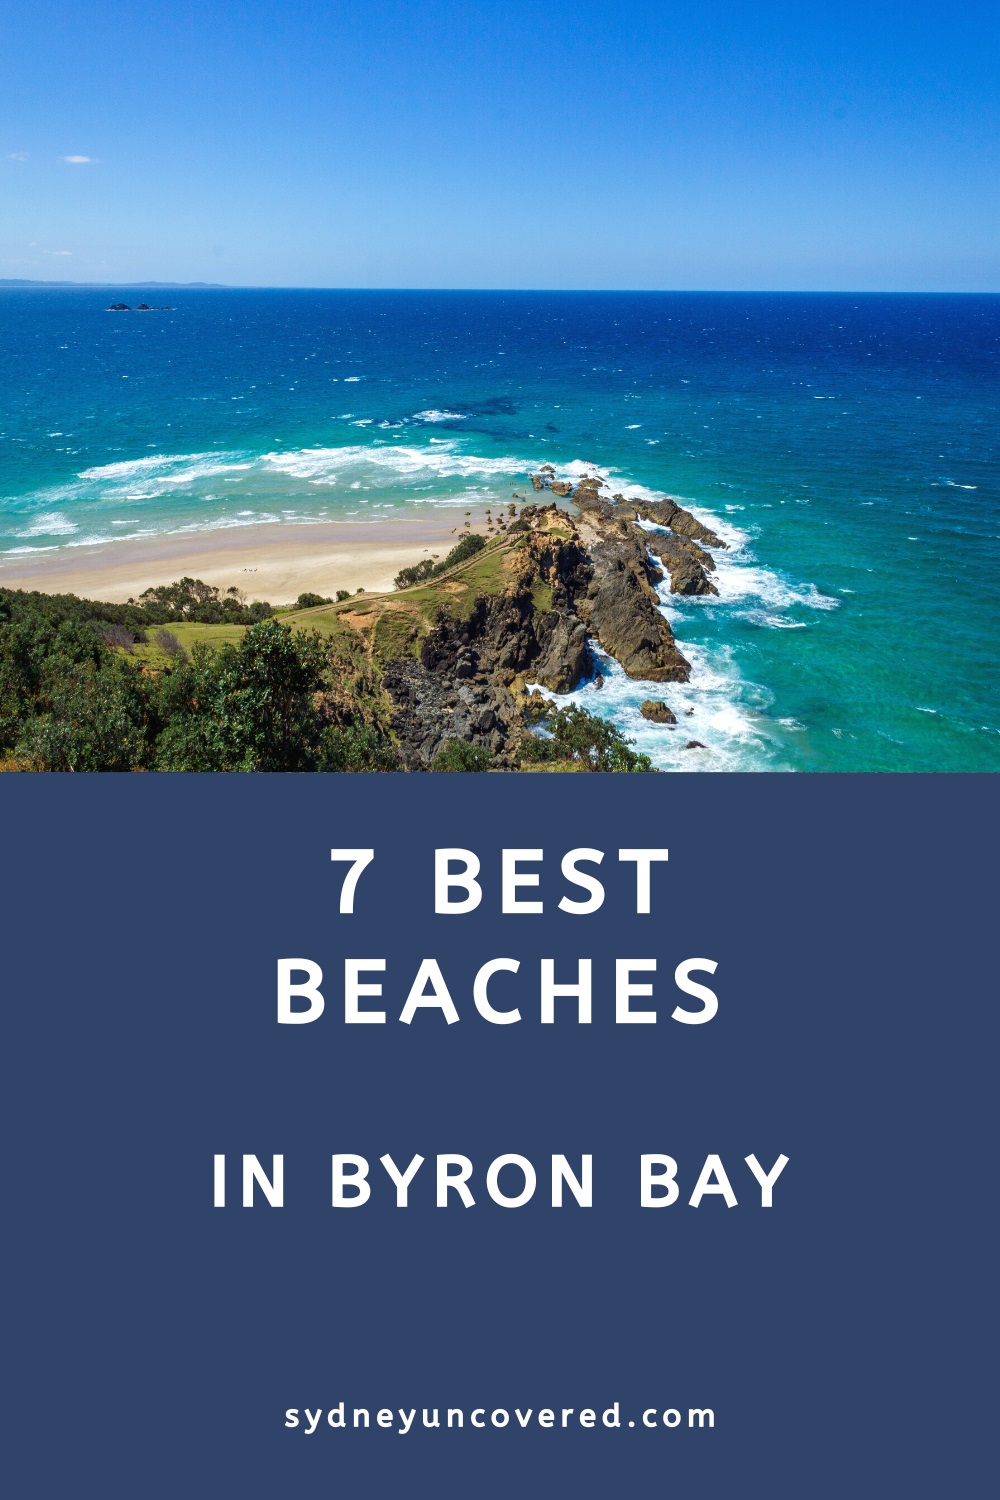 7 Best beaches in Byron Bay